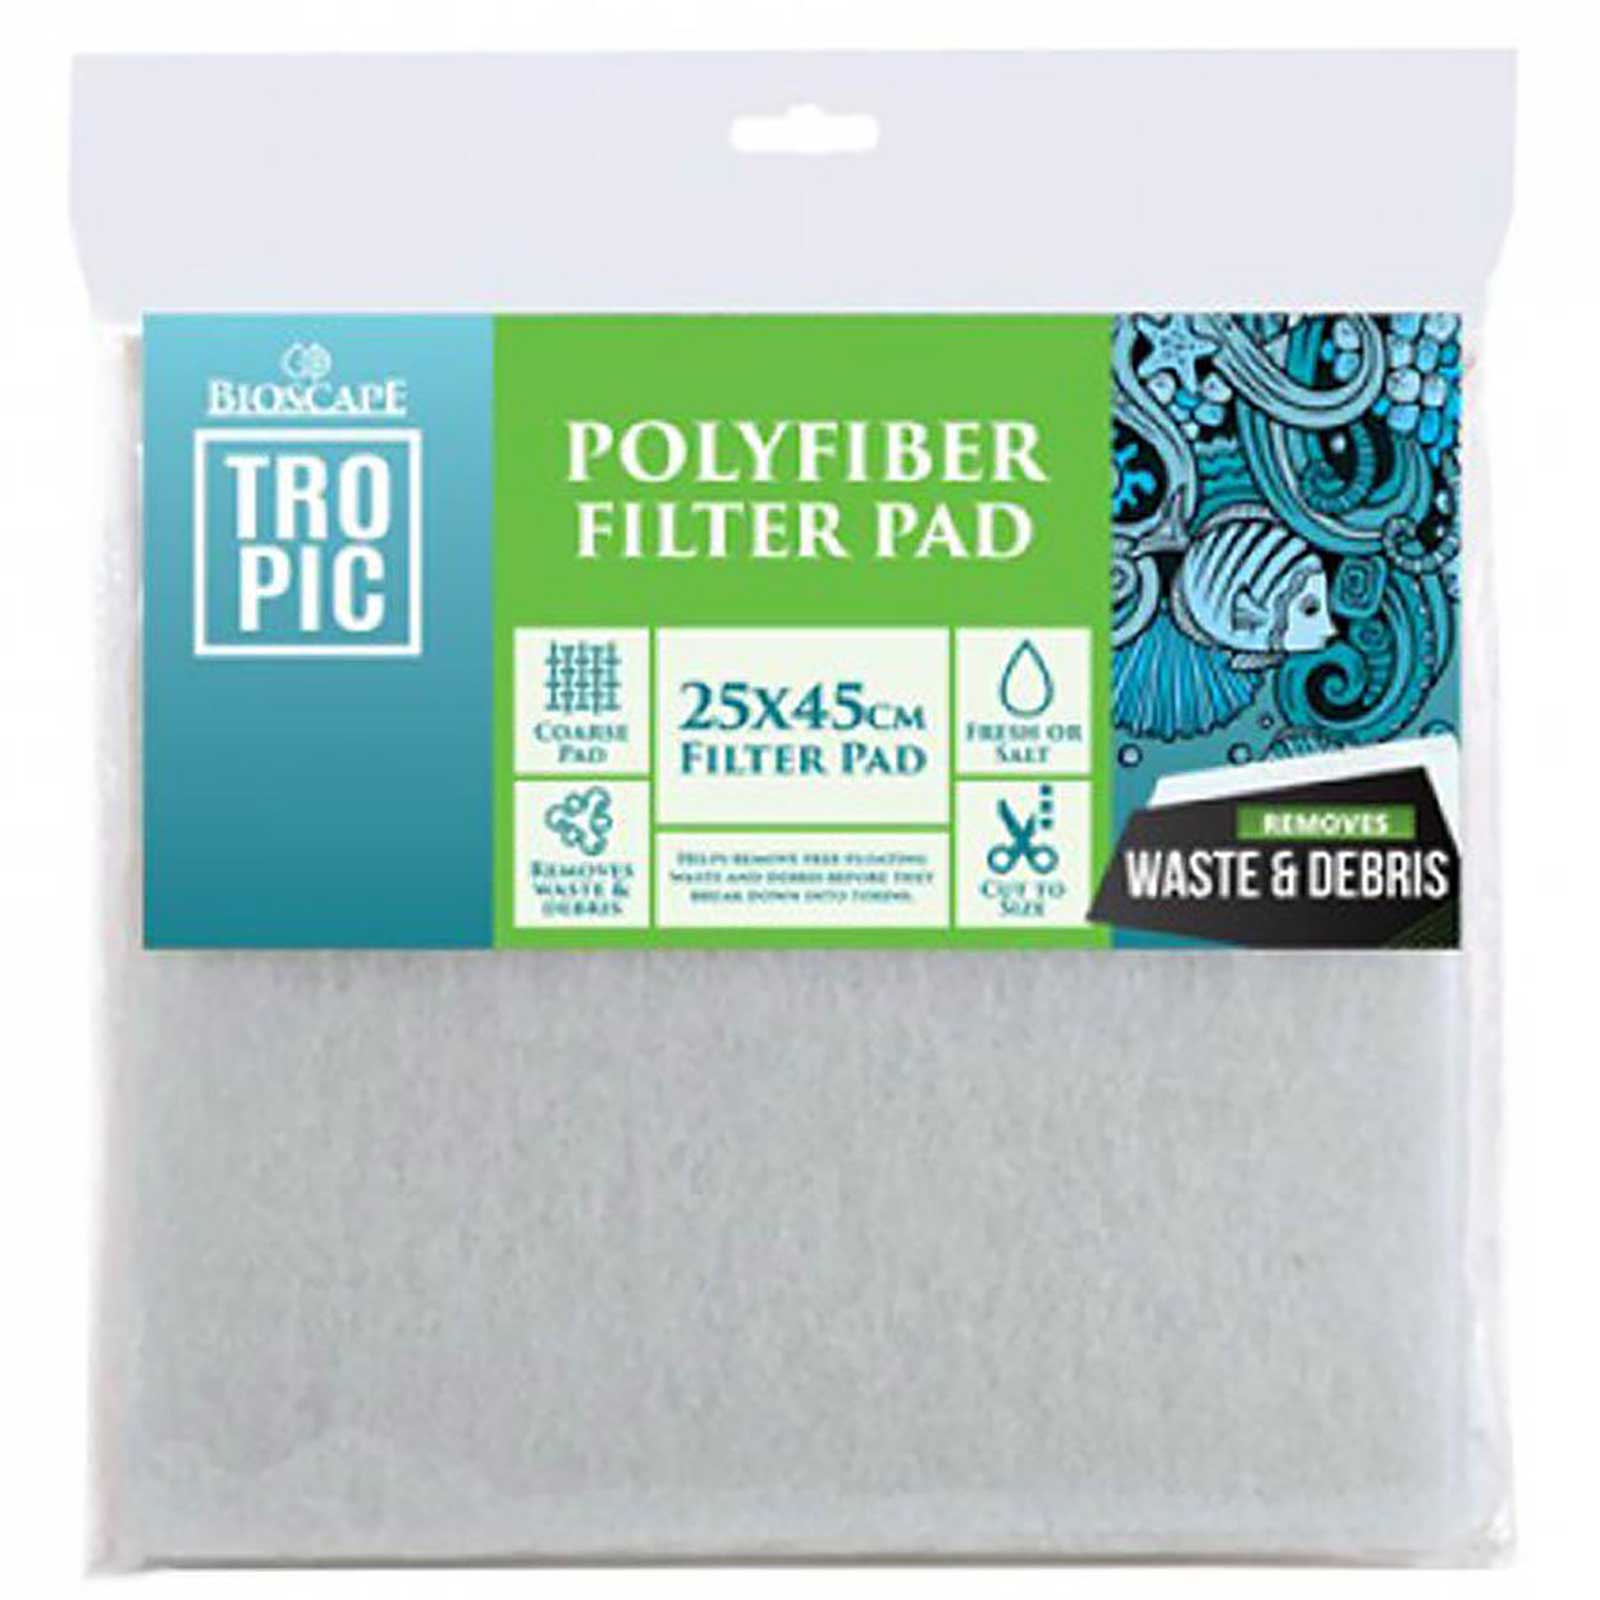 Bioscape Polyfiber Filter Pad